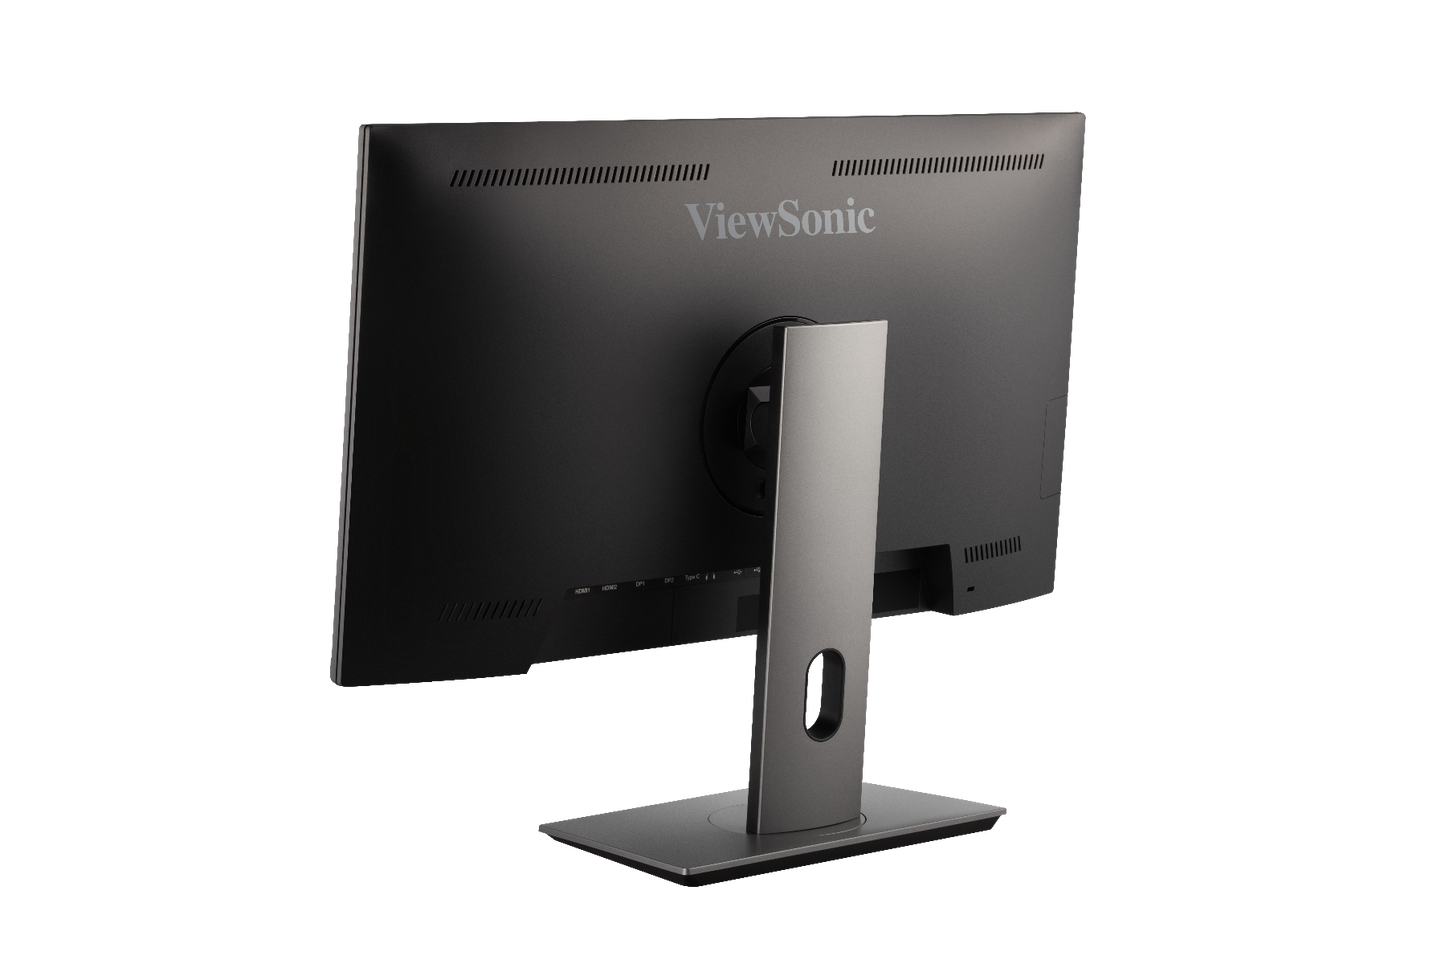 View Sonic - VX2882-4KP - 28” 150Hz UHD Gaming Monitor